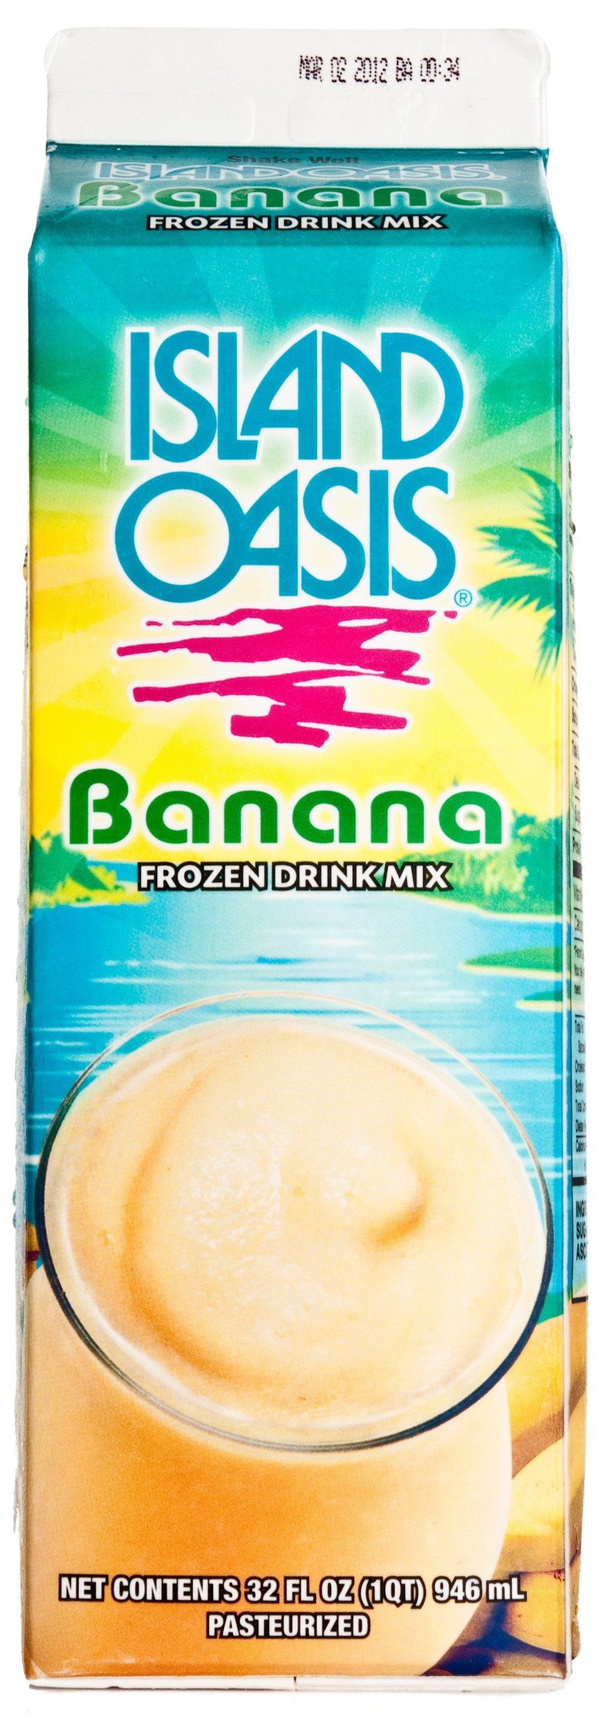 Banana Frozen Drink Mix, 12/32oz Island Oasis